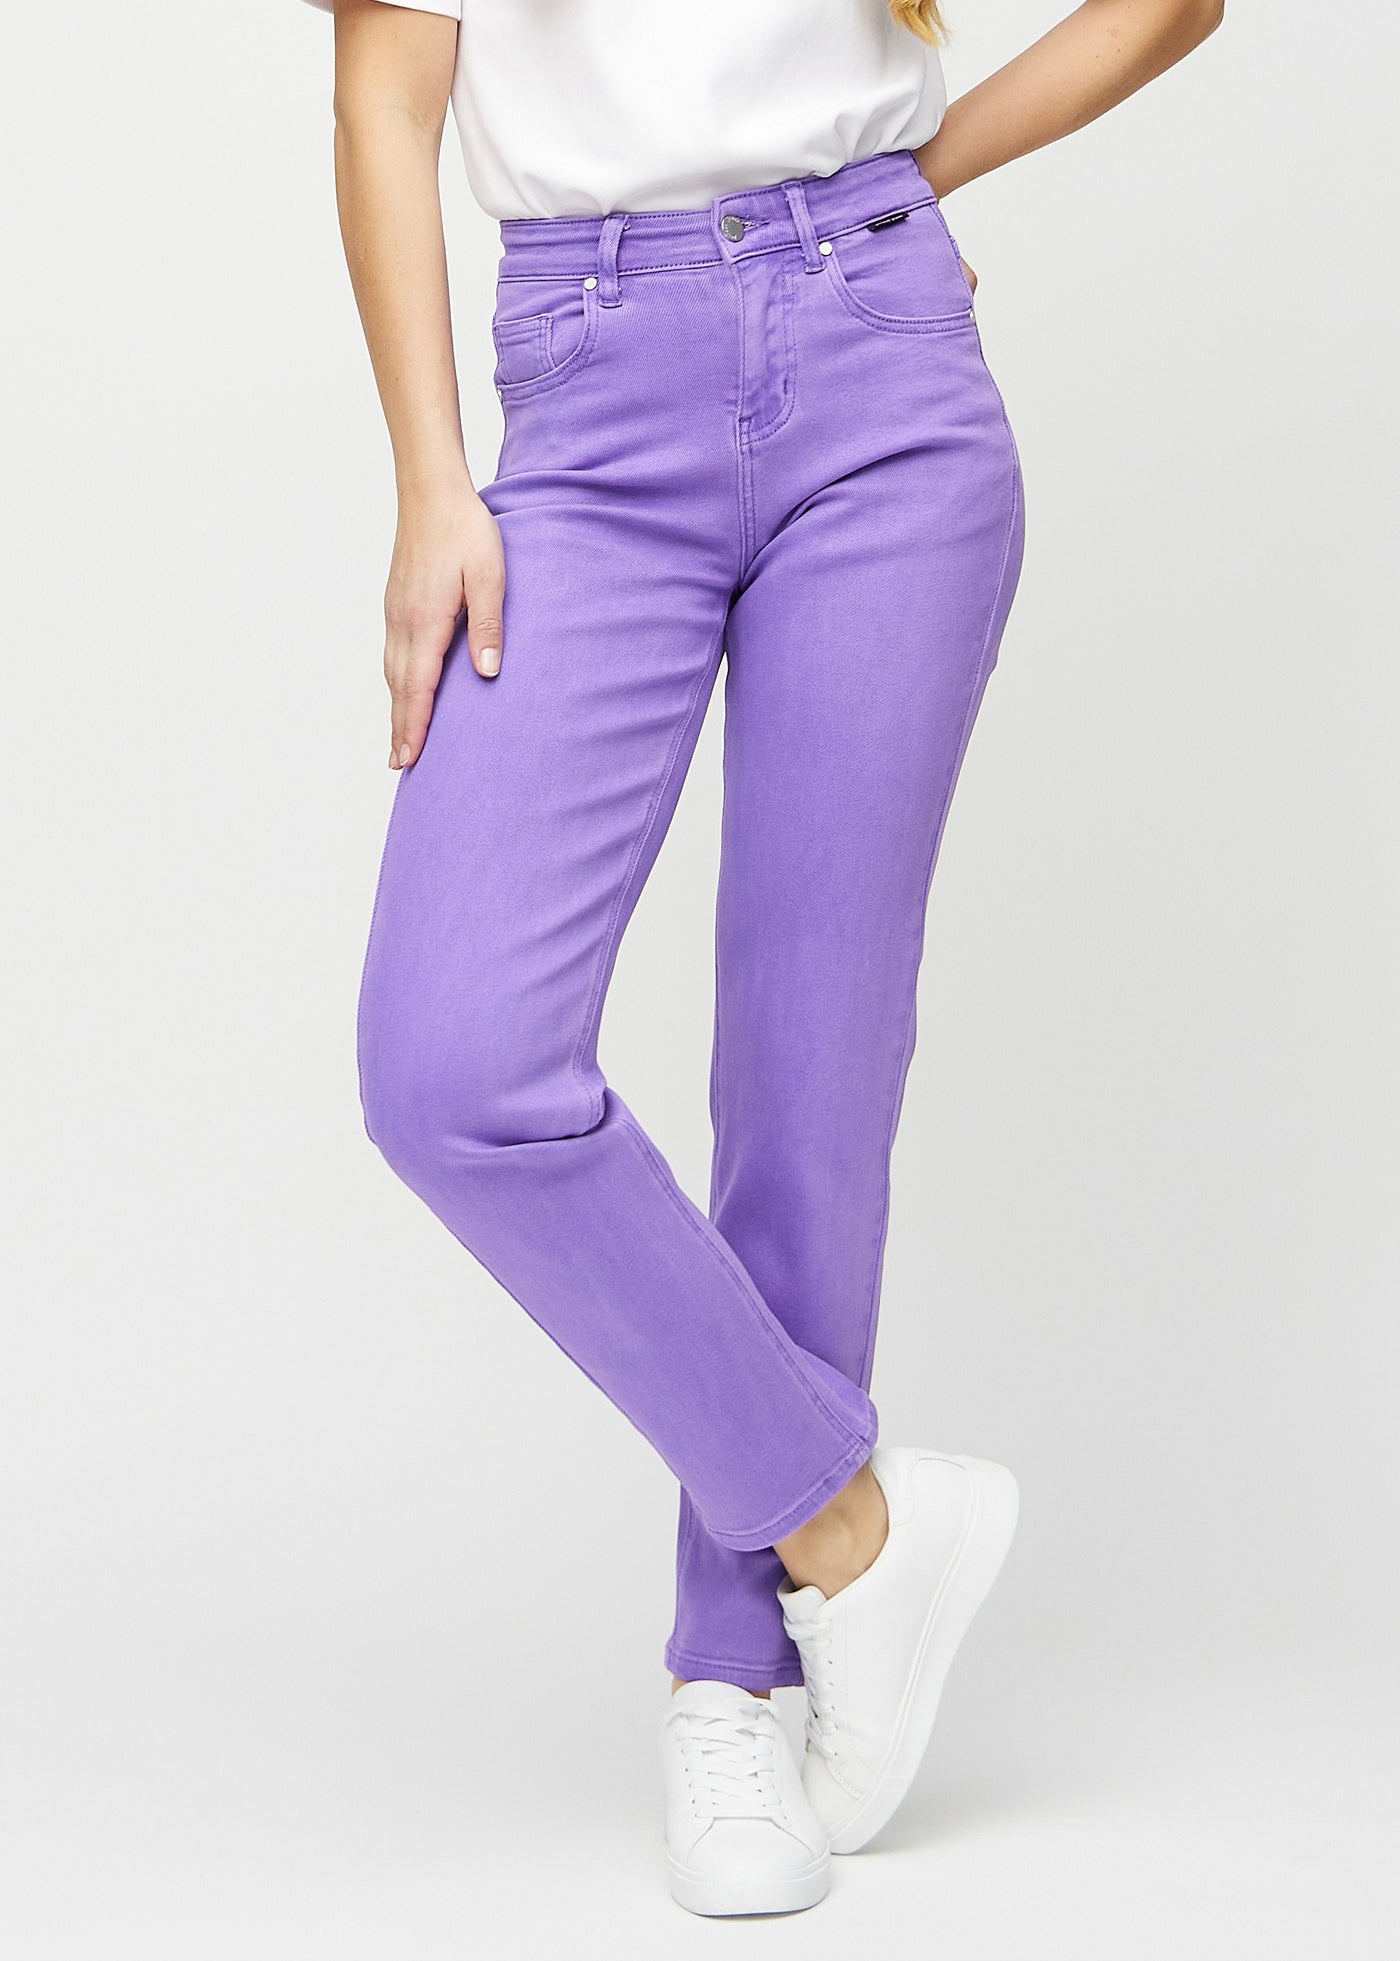 Lilla regular jeans, modelnavn Lavenders, som går lige ned langs benet, set forfra.